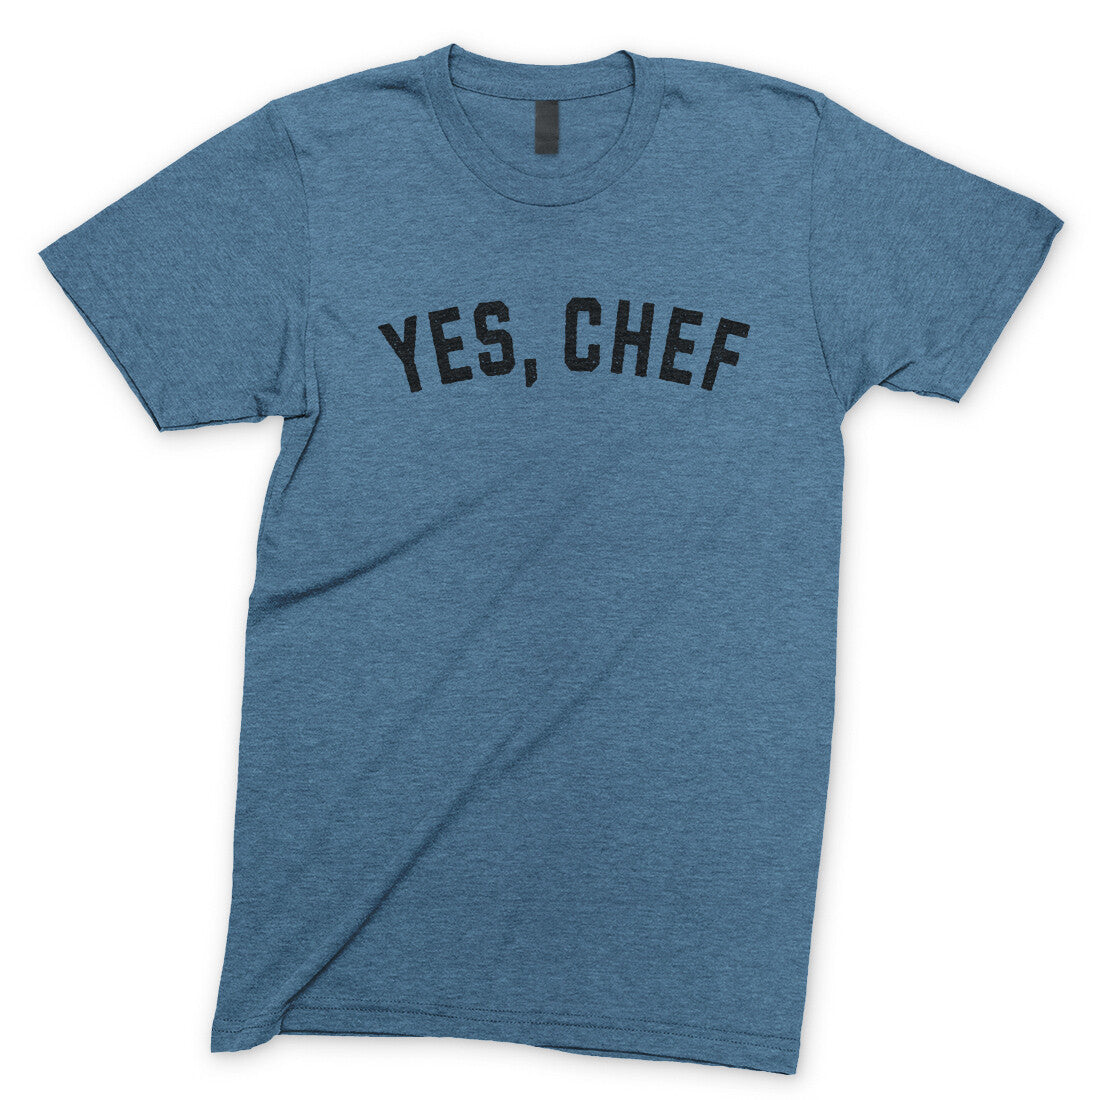 Yes Chef in Heather Indigo Color